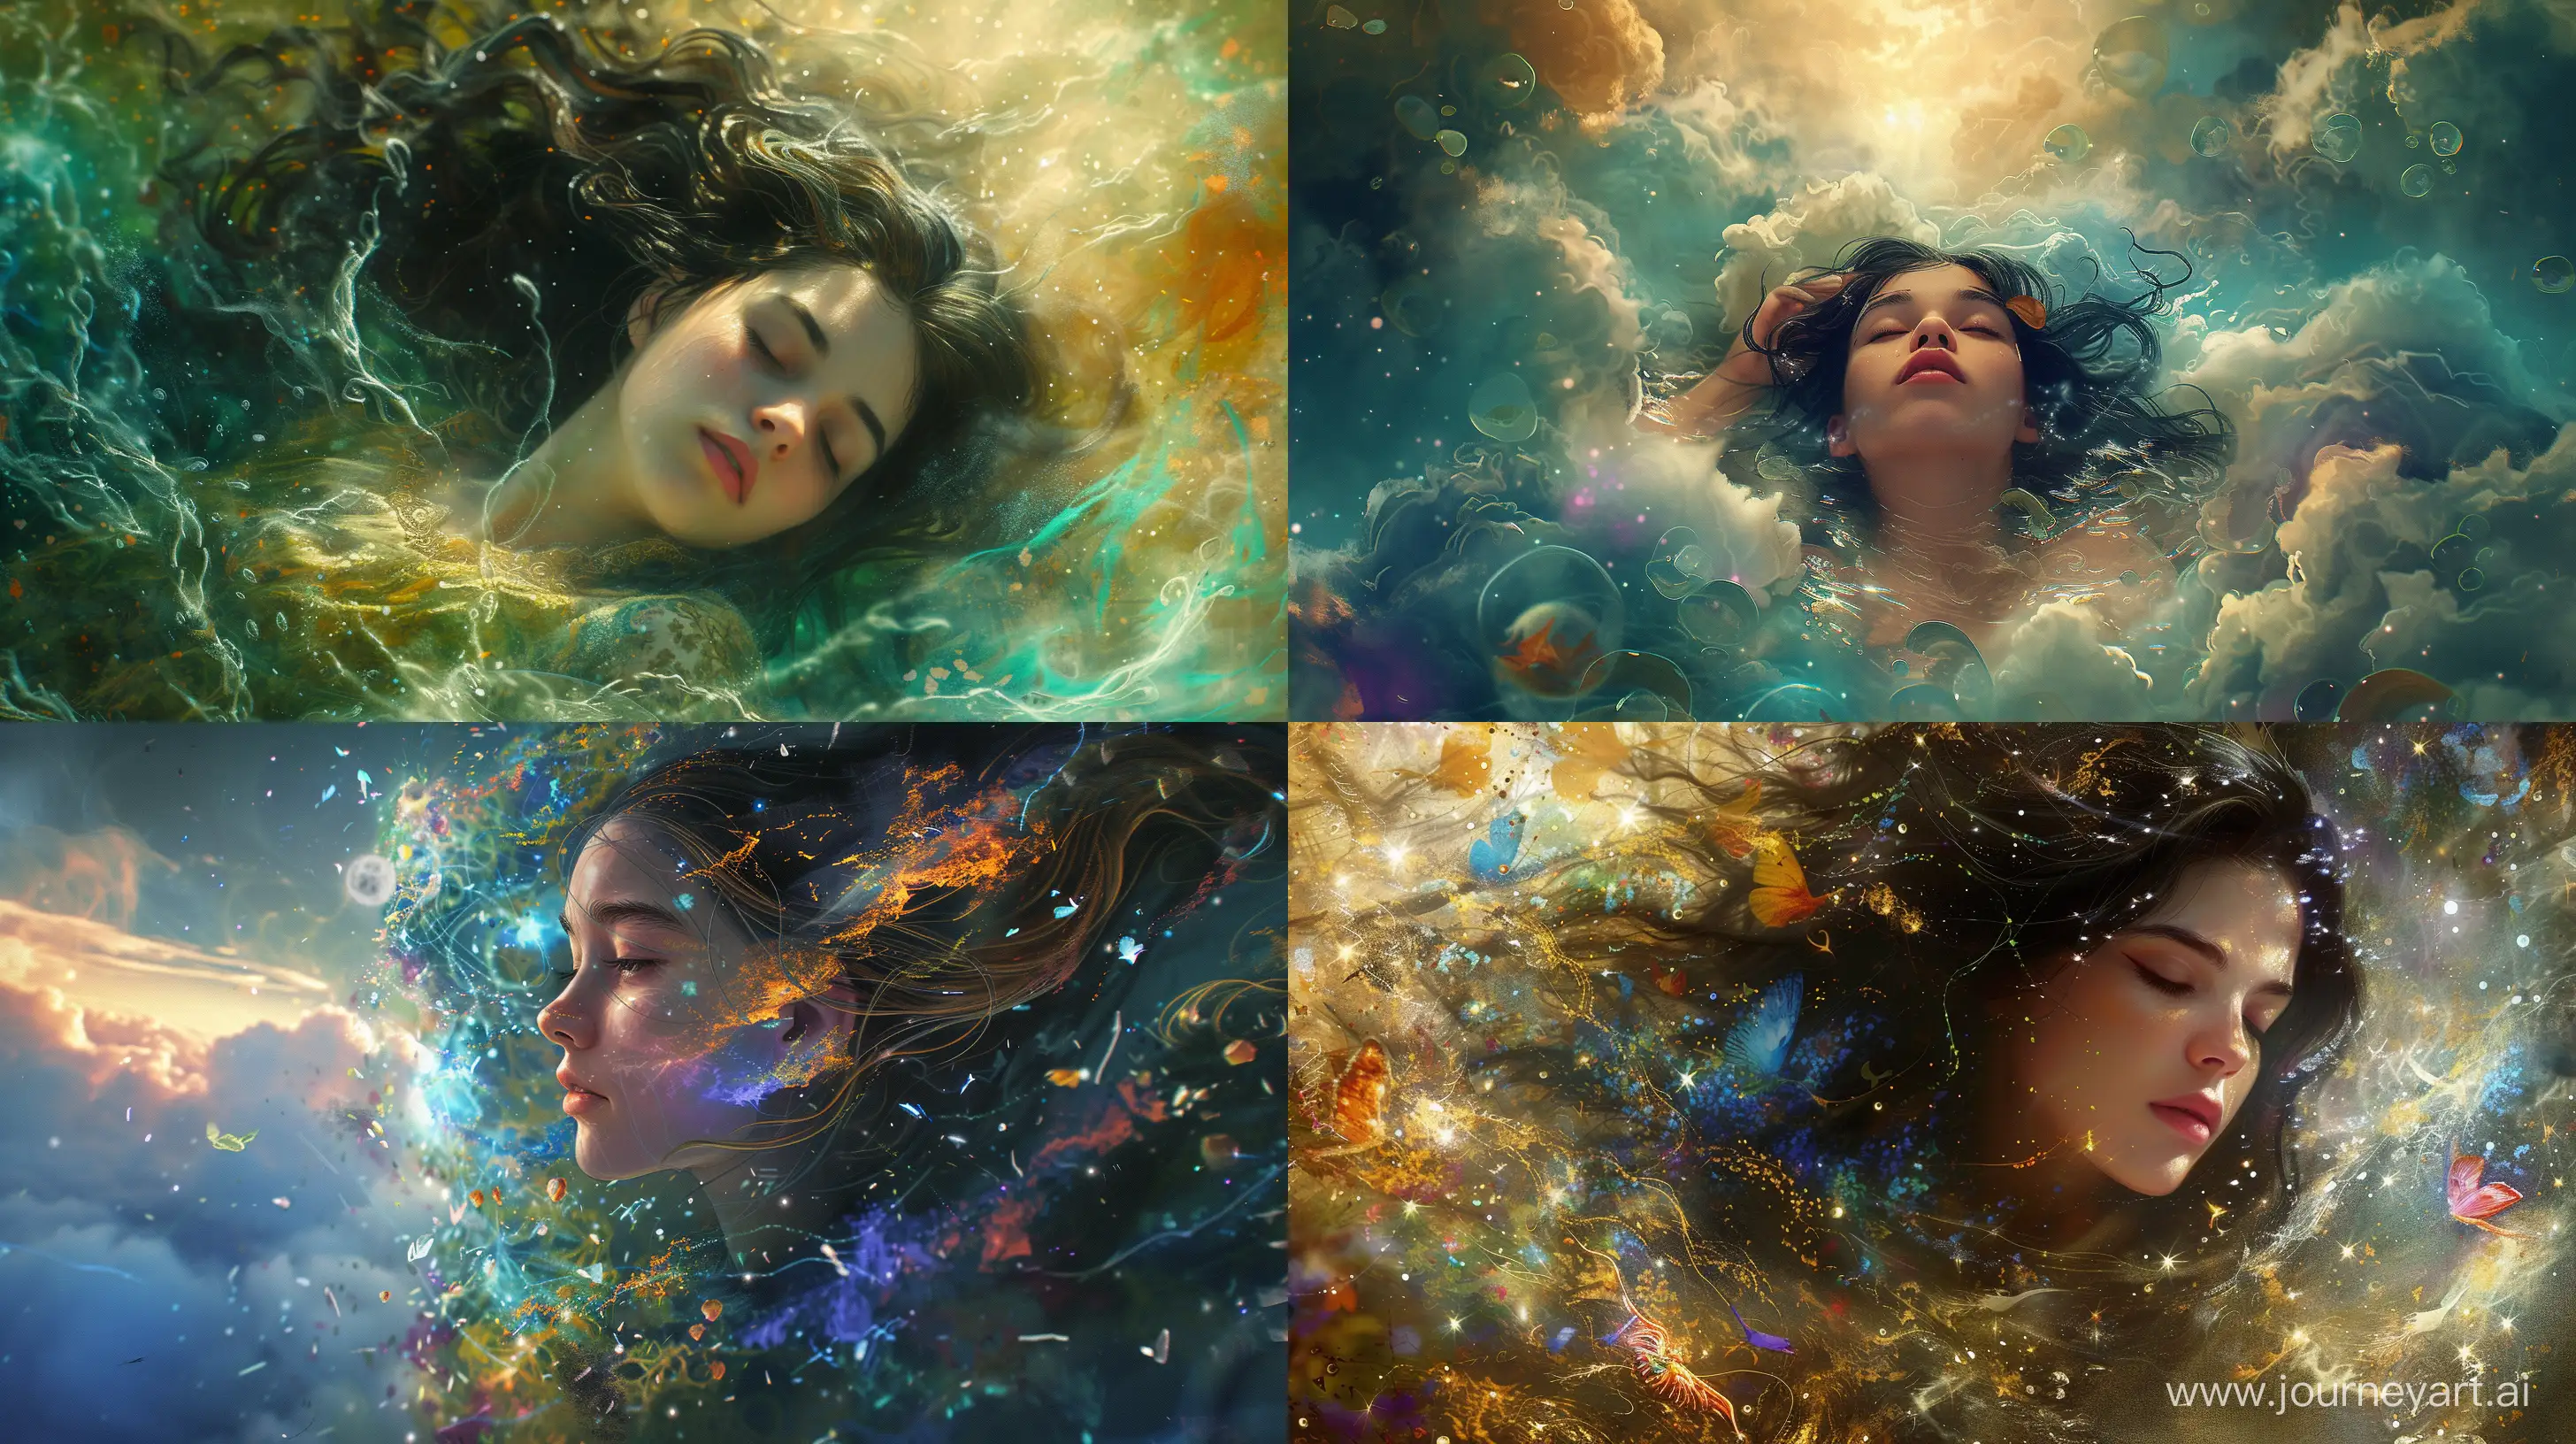 Enchanting-Dream-Woman-Immersed-in-Fantasy-by-Greg-Rutkowski